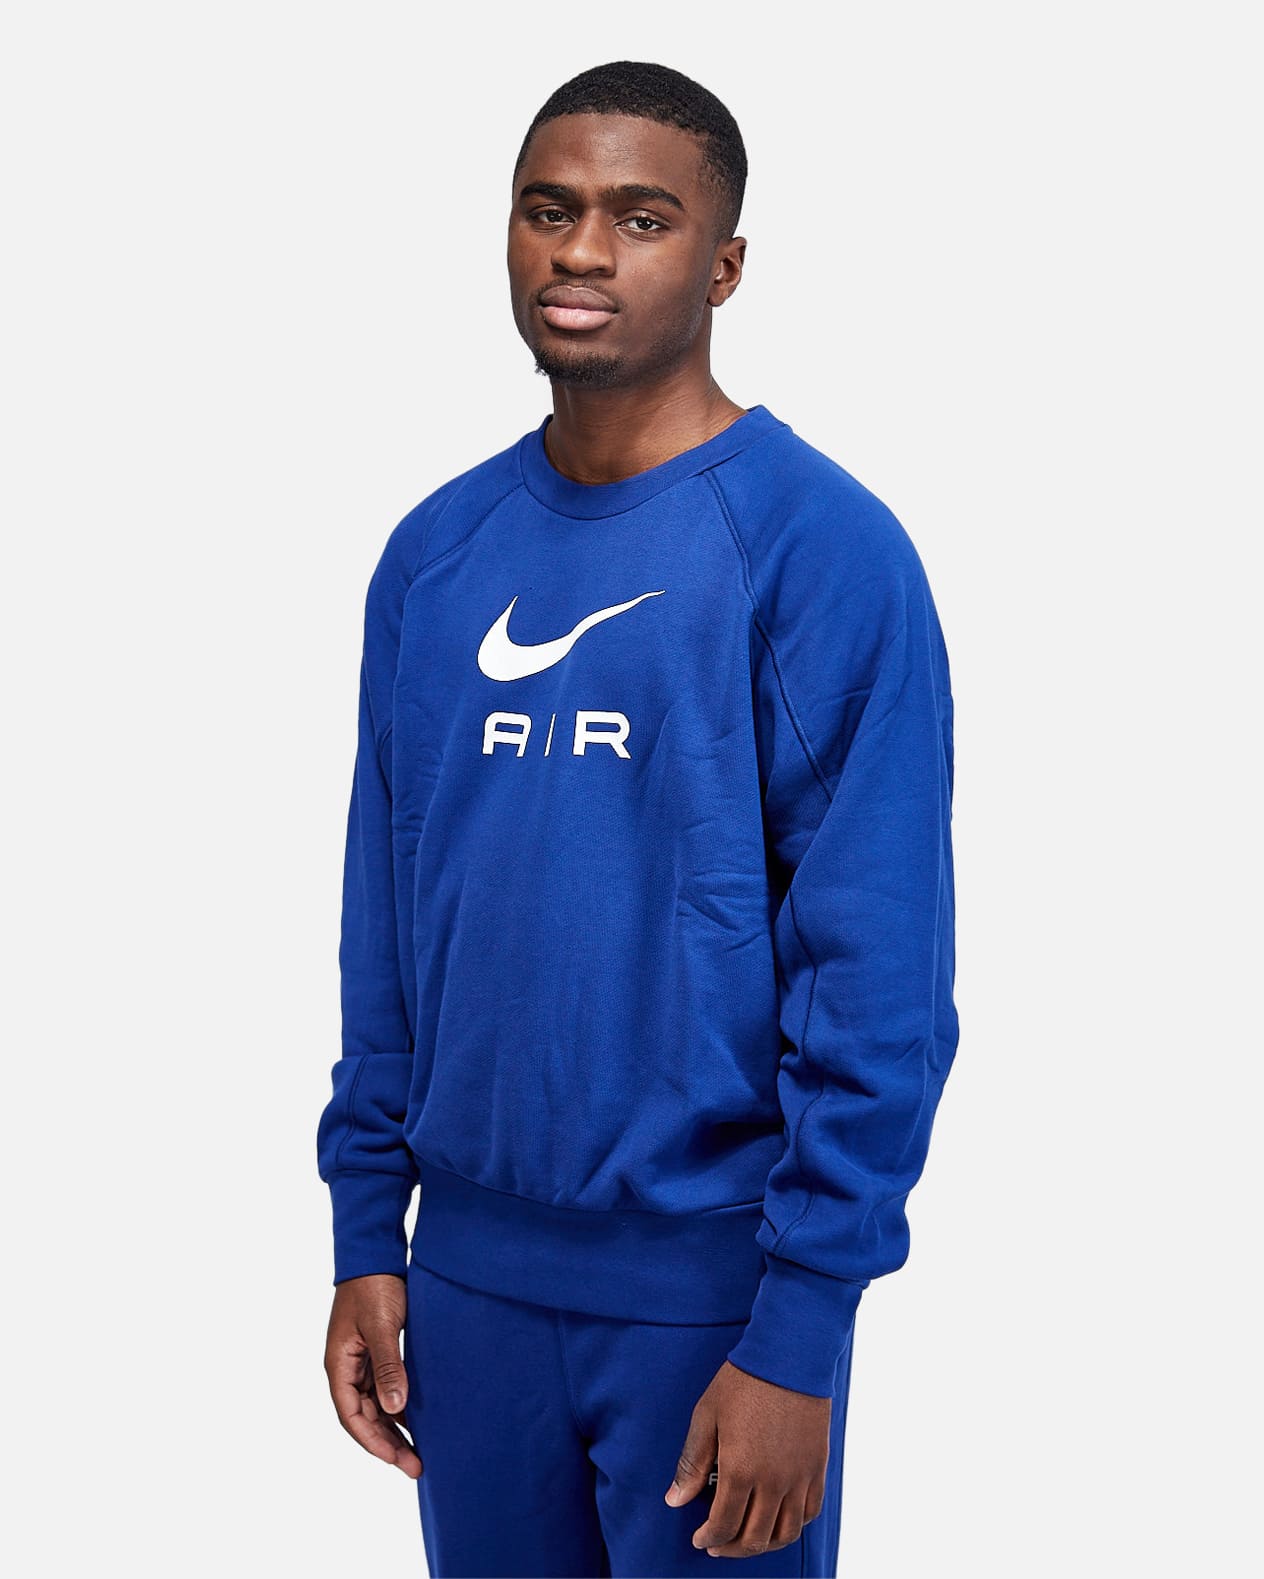 Nike Air-Sweatshirt - Blau/Weiß